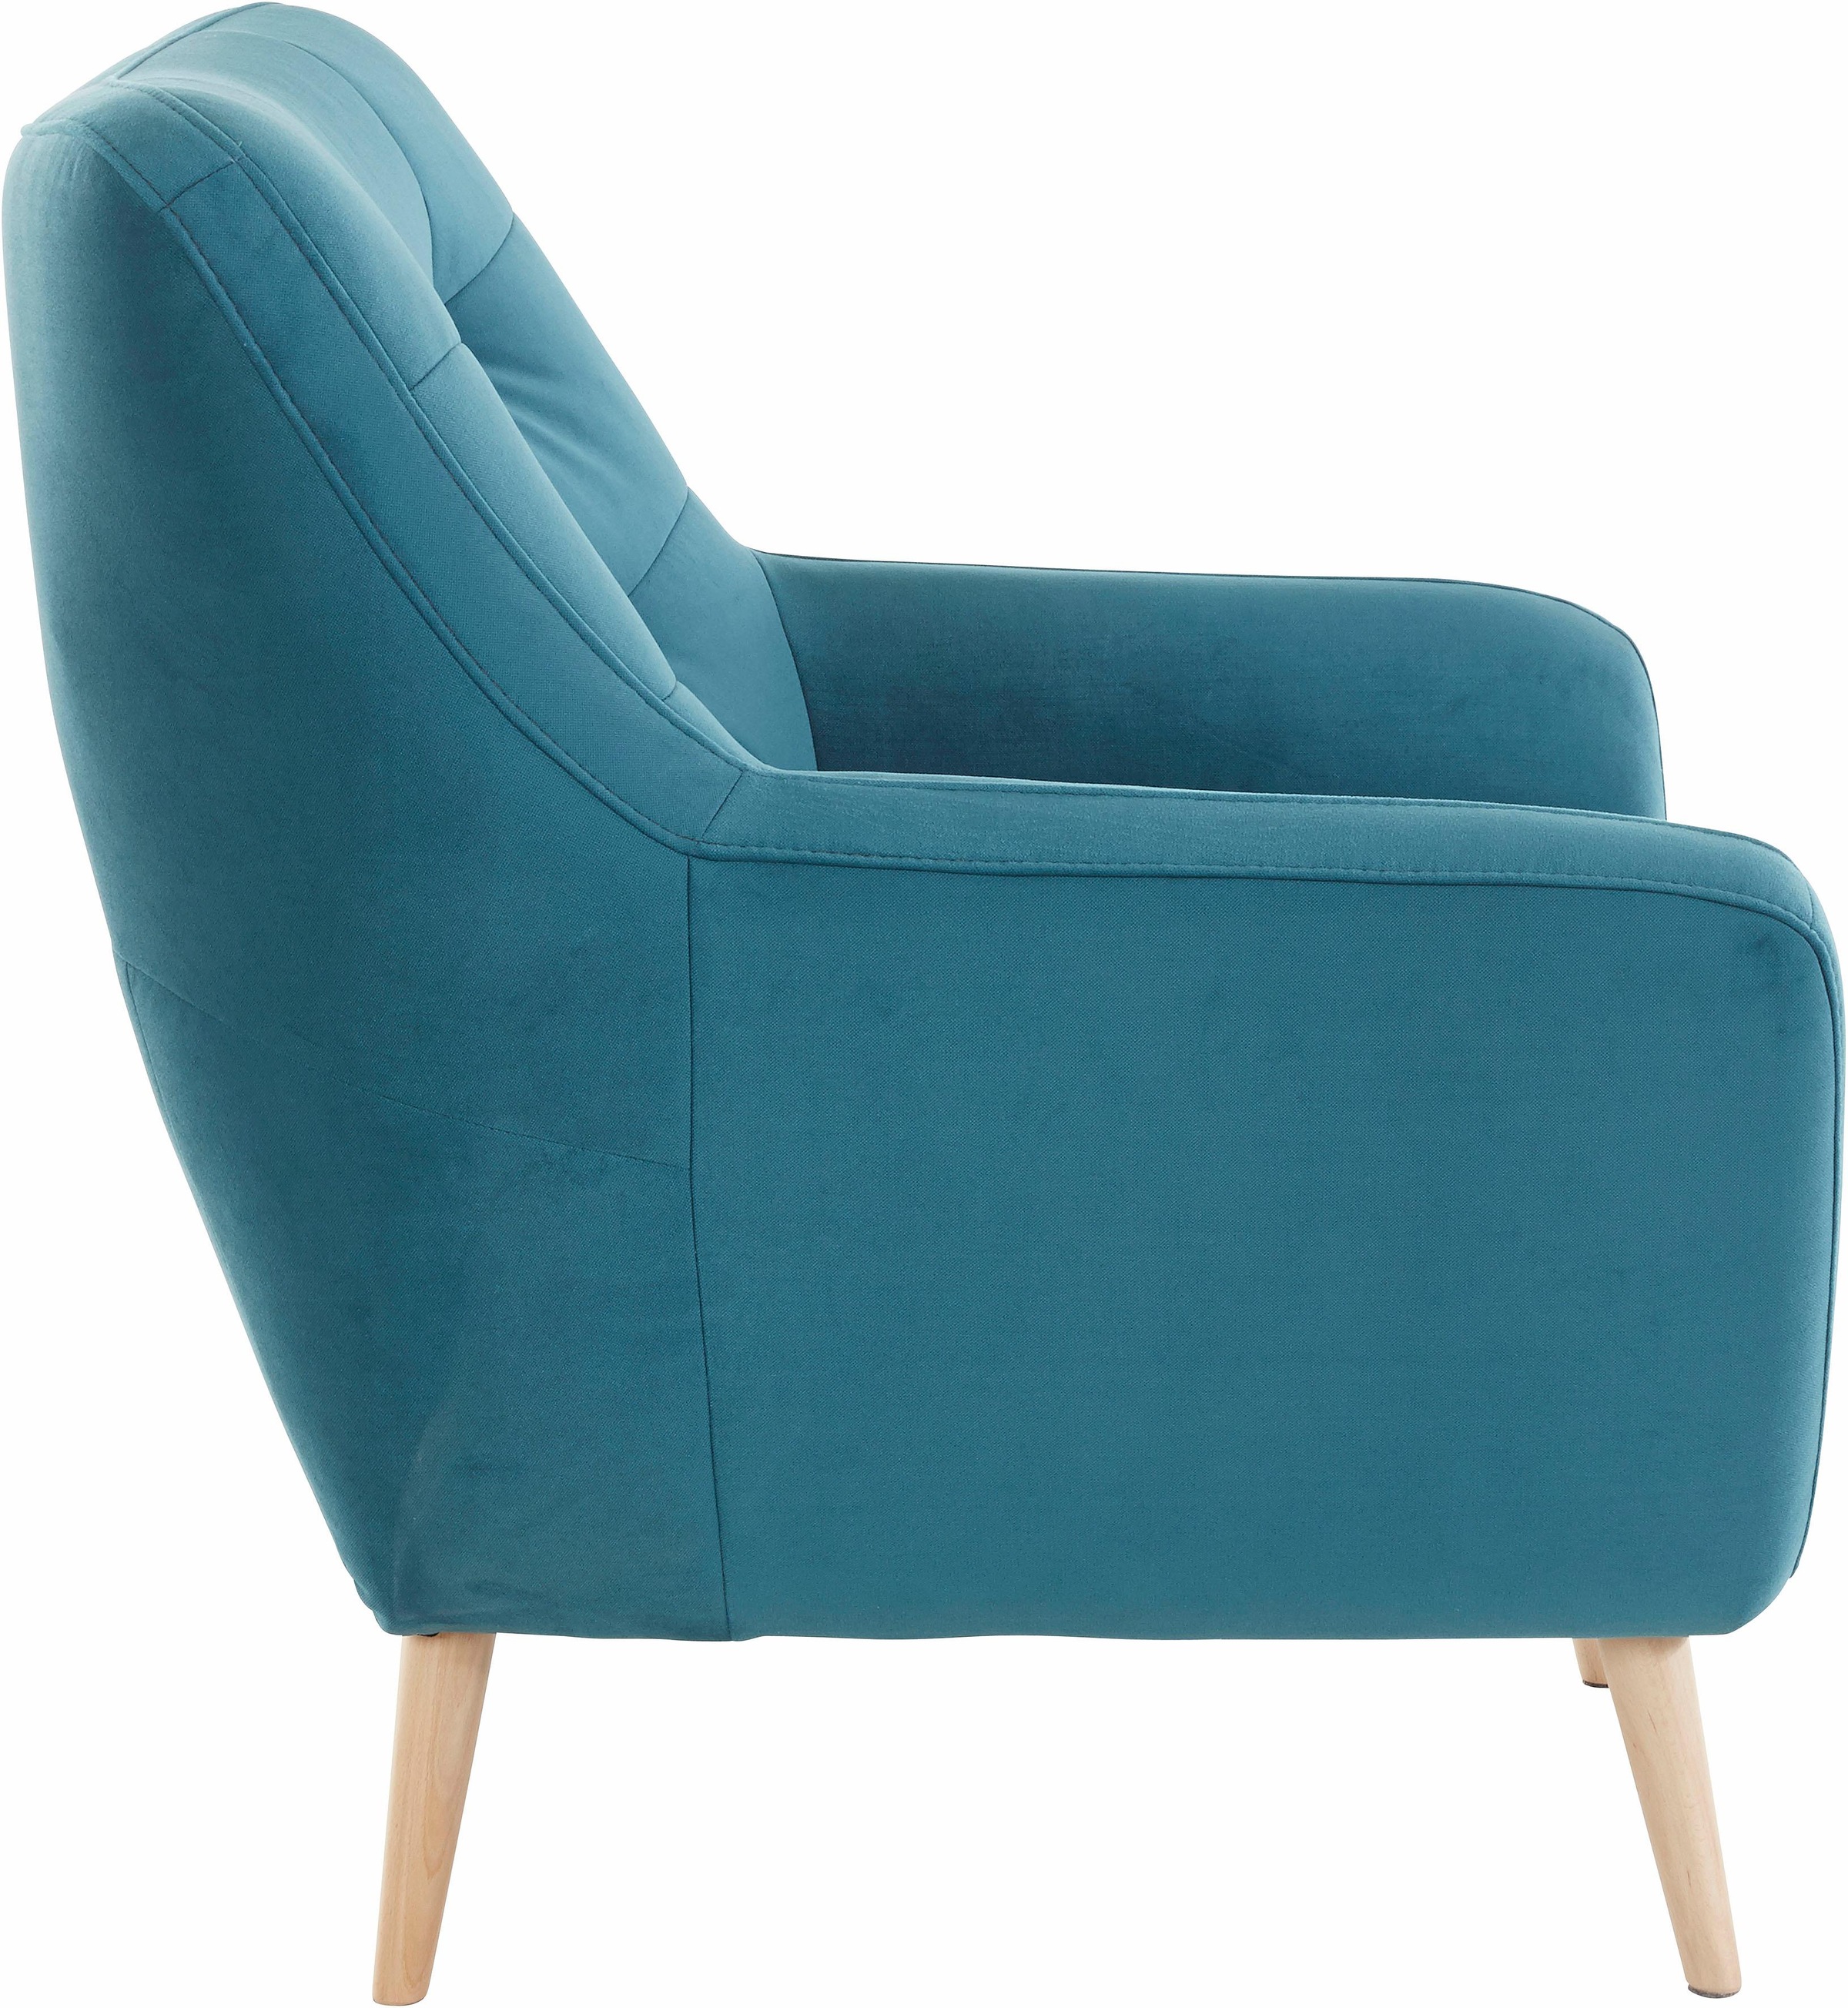 exxpo - sofa fashion Sessel »Scandi, Loungesessel mit tollem Sitzkomfort, hochwertige Polsterung«, bequem, hohe Holzfüße